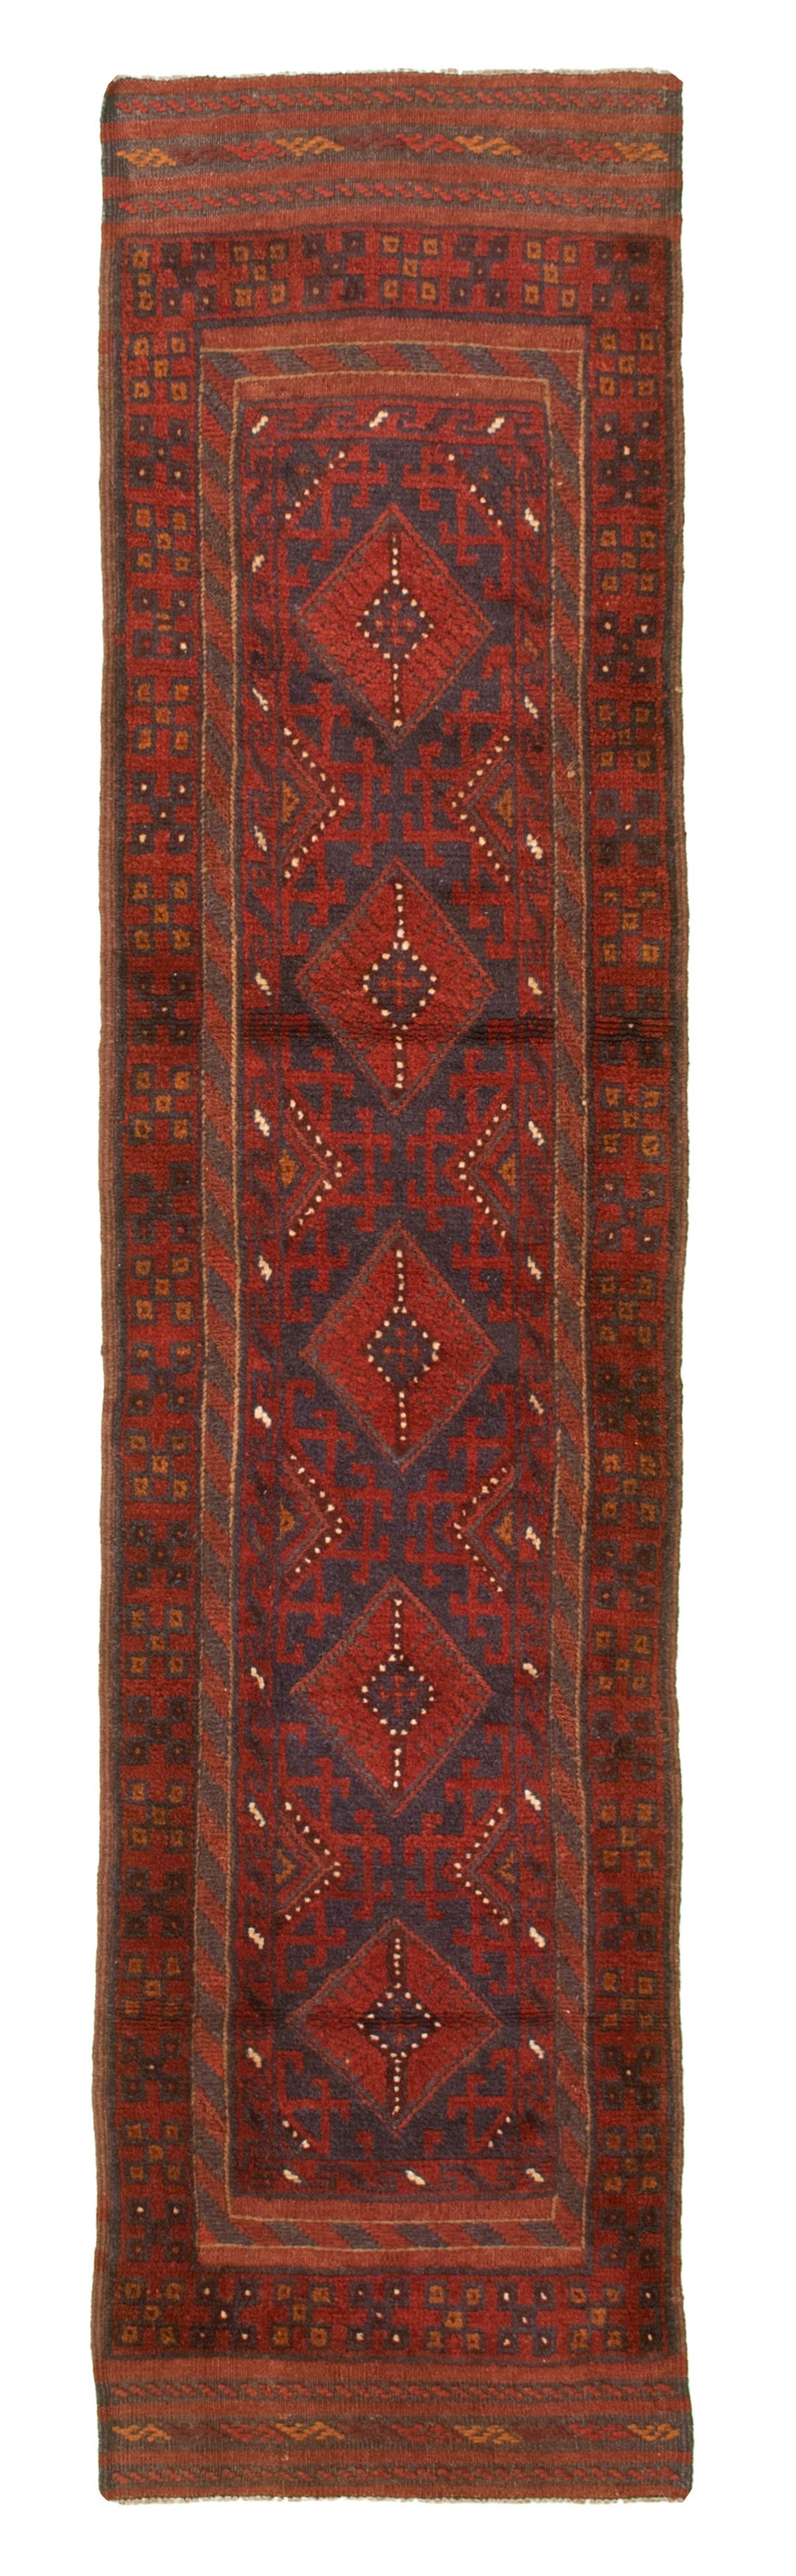 Hand-knotted Tajik Caucasian Red Wool Rug 2'0" x 8'4" (23) Size: 2'0" x 8'4"  